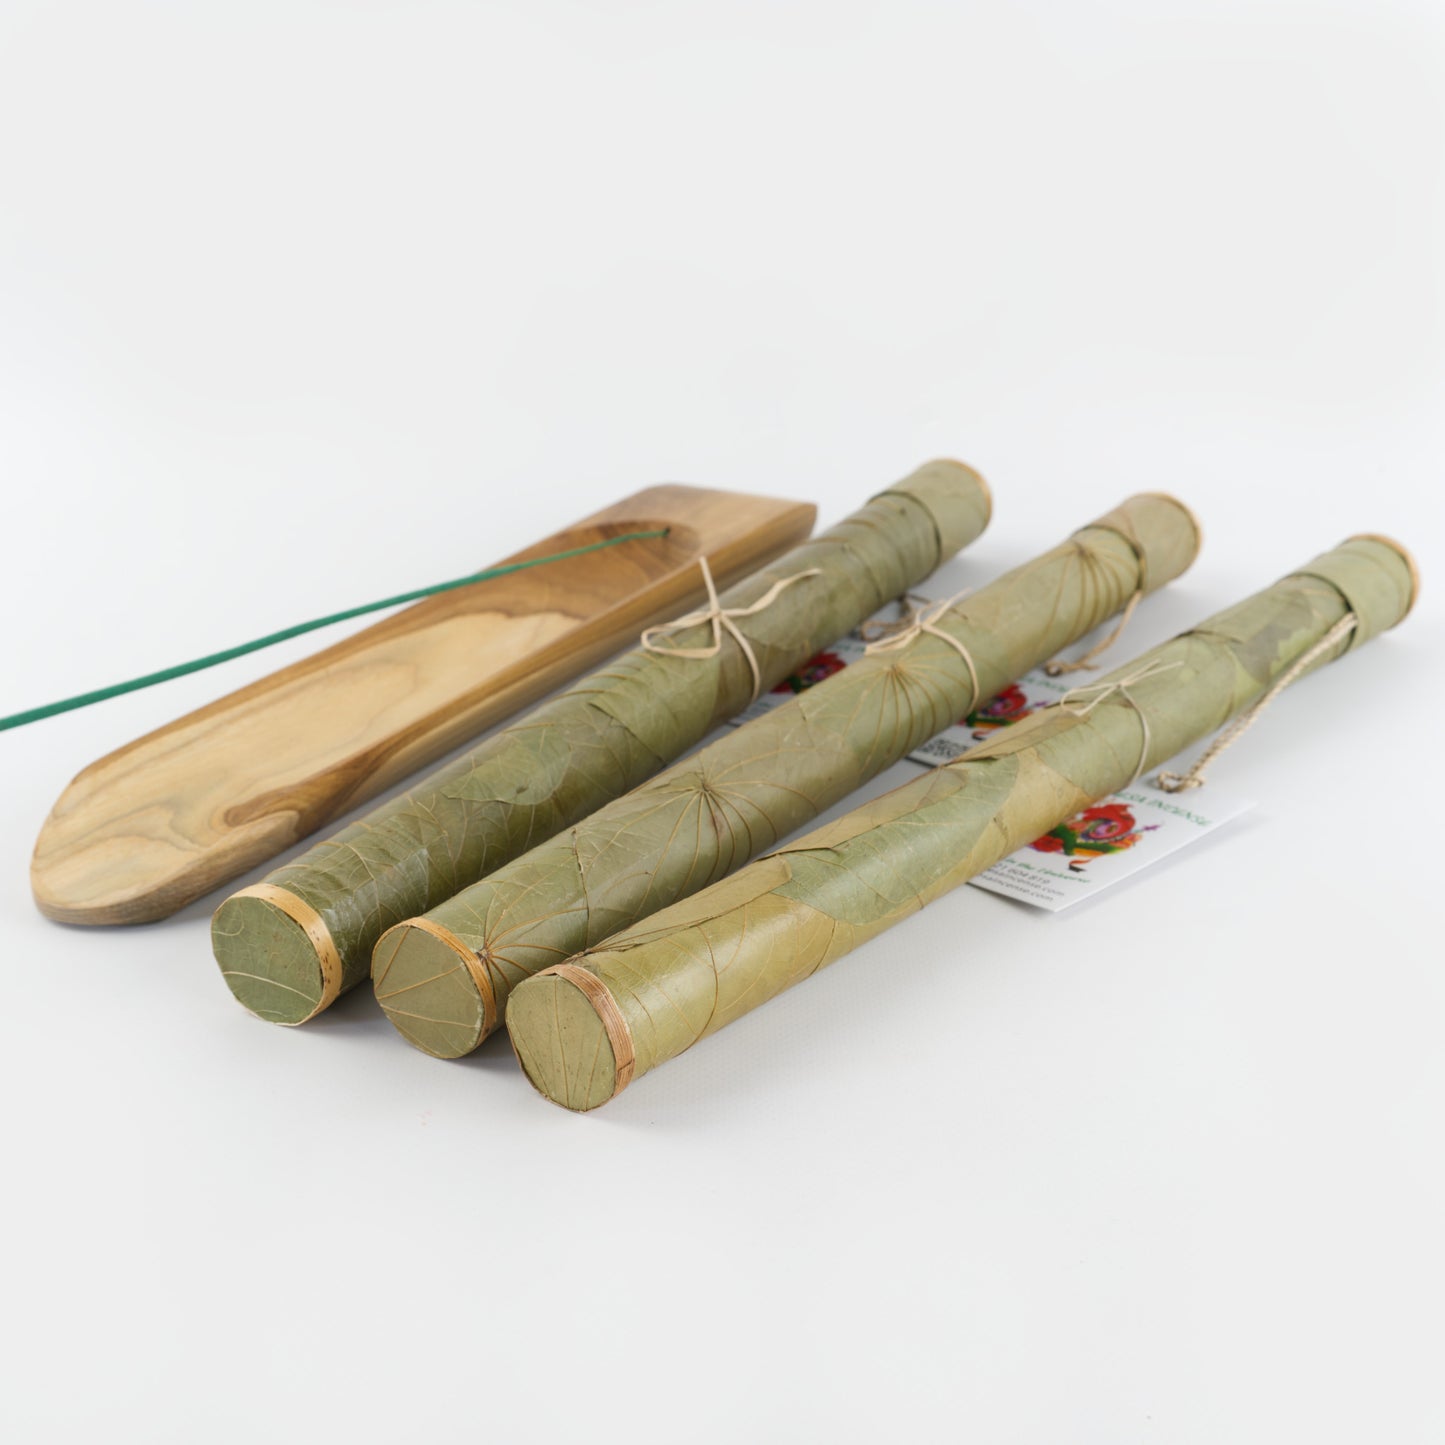 Ganesa Wooden Incense Holder XL